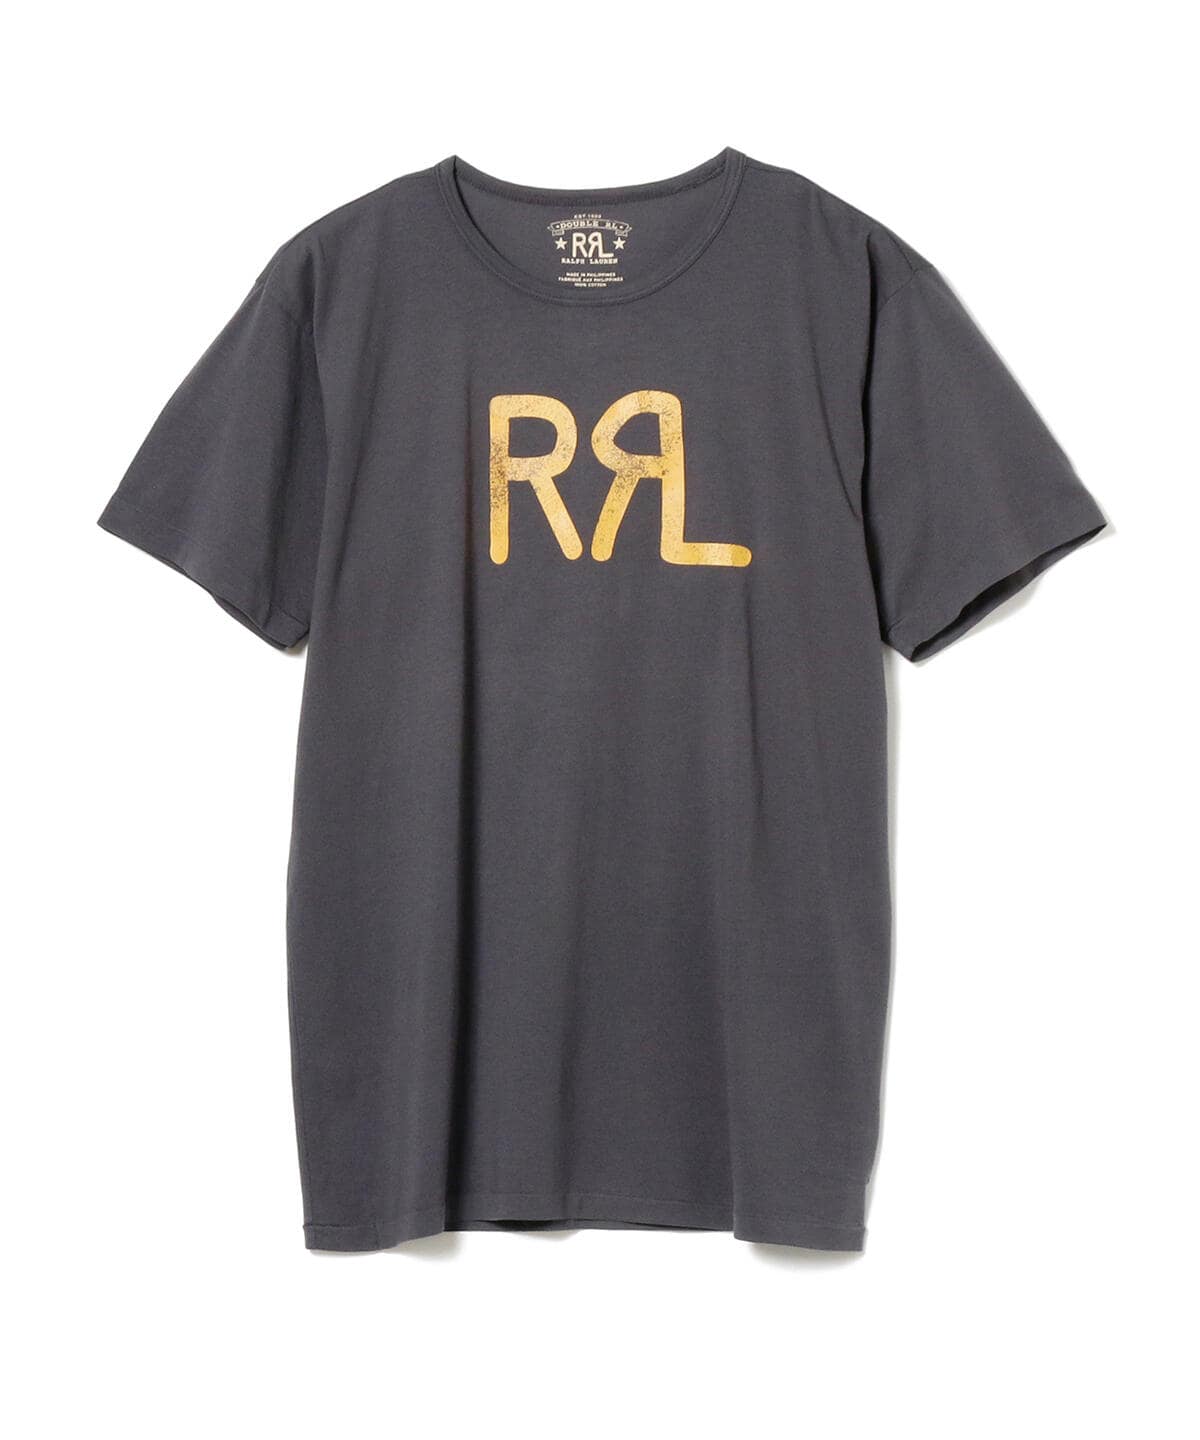 RRL 定番 White Tee Shirt